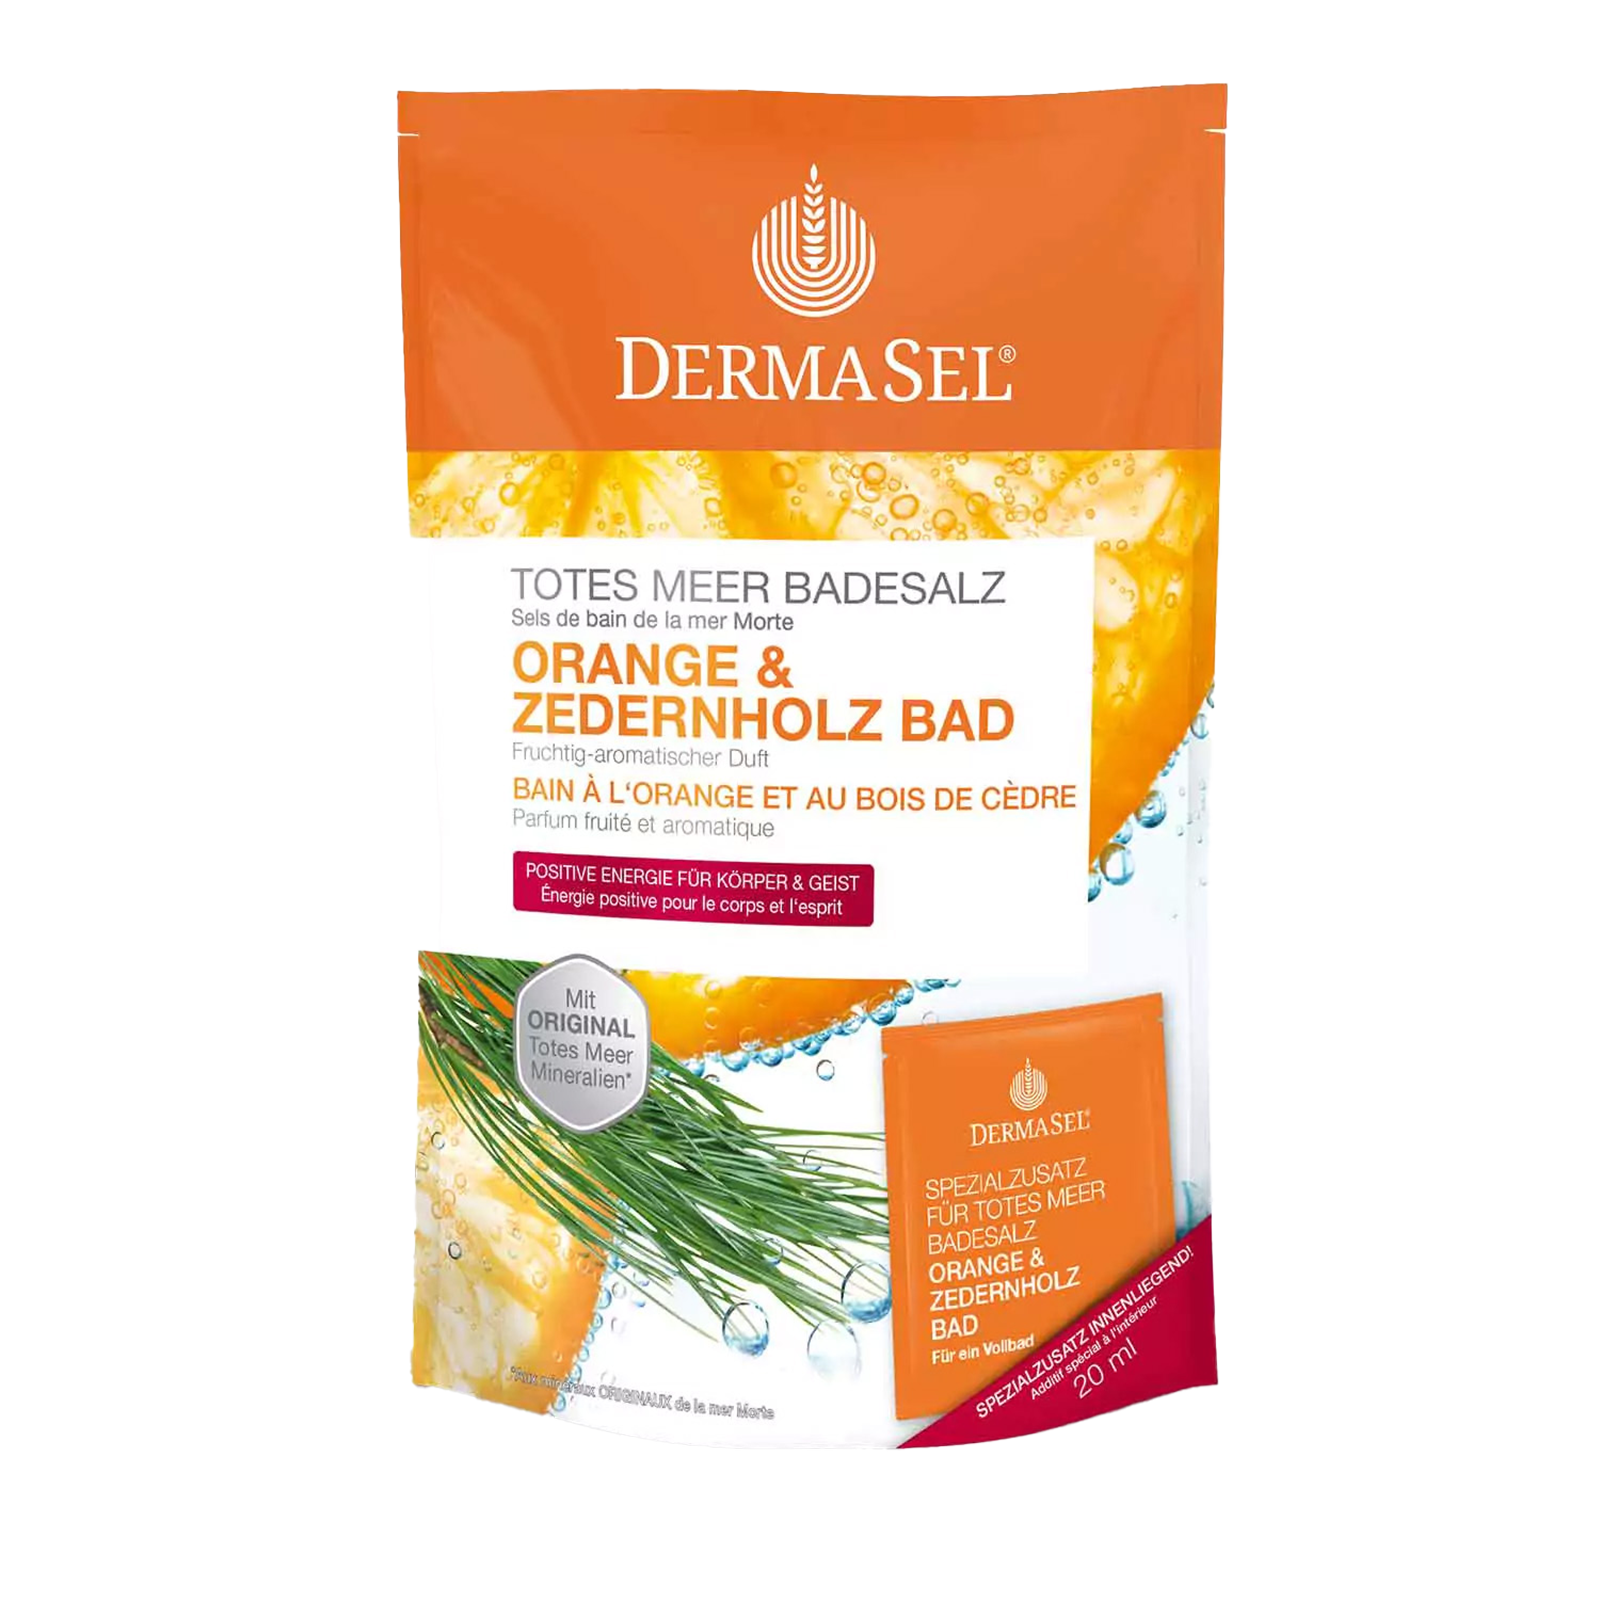 DermaSel® Totes Meer Badesalz Orange & Zedernholz